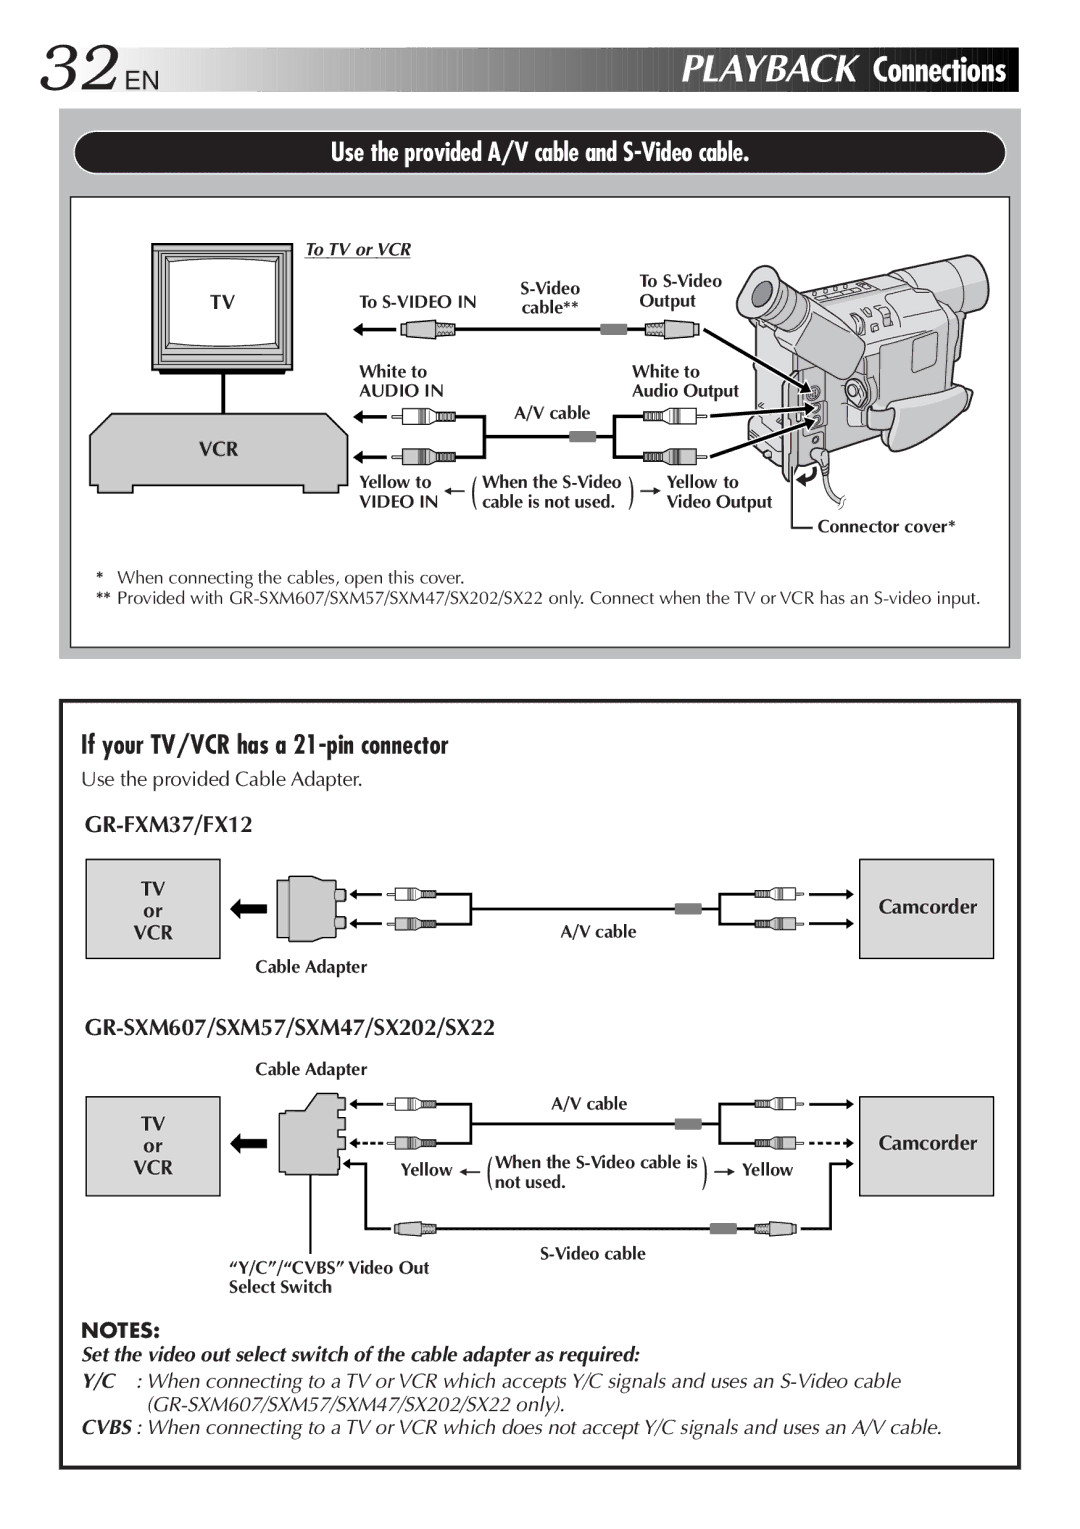 JVC GR-SX202, GR-FX12, GR-SX22 32 EN, If your TV/VCR has a 21-pin connector, GR-SXM607/SXM57/SXM47/SX202/SX22, Camcorder 